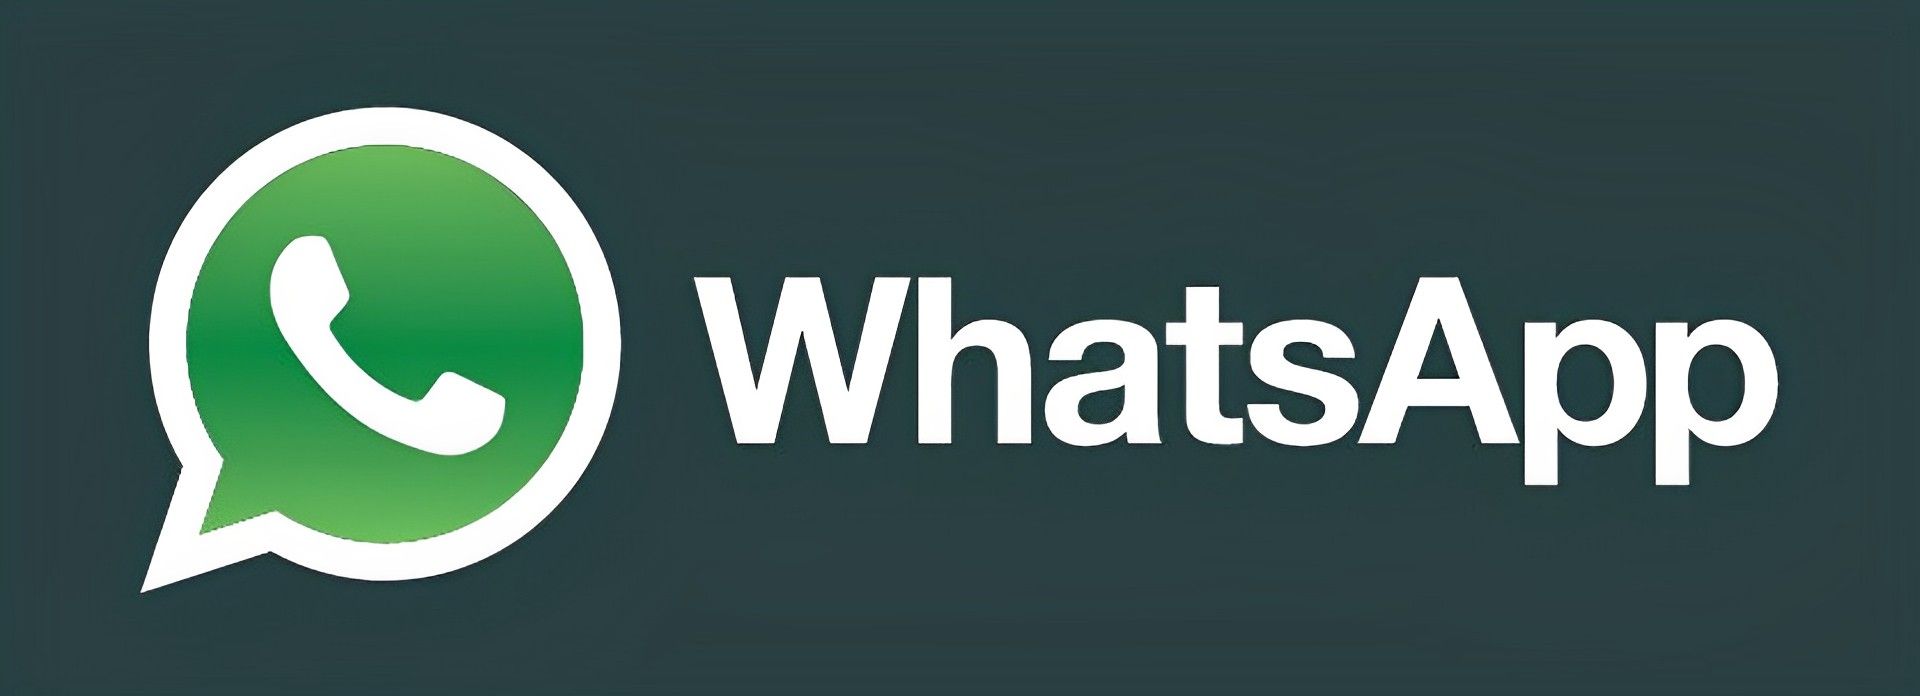 How to hide blue ticks on WhatsApp